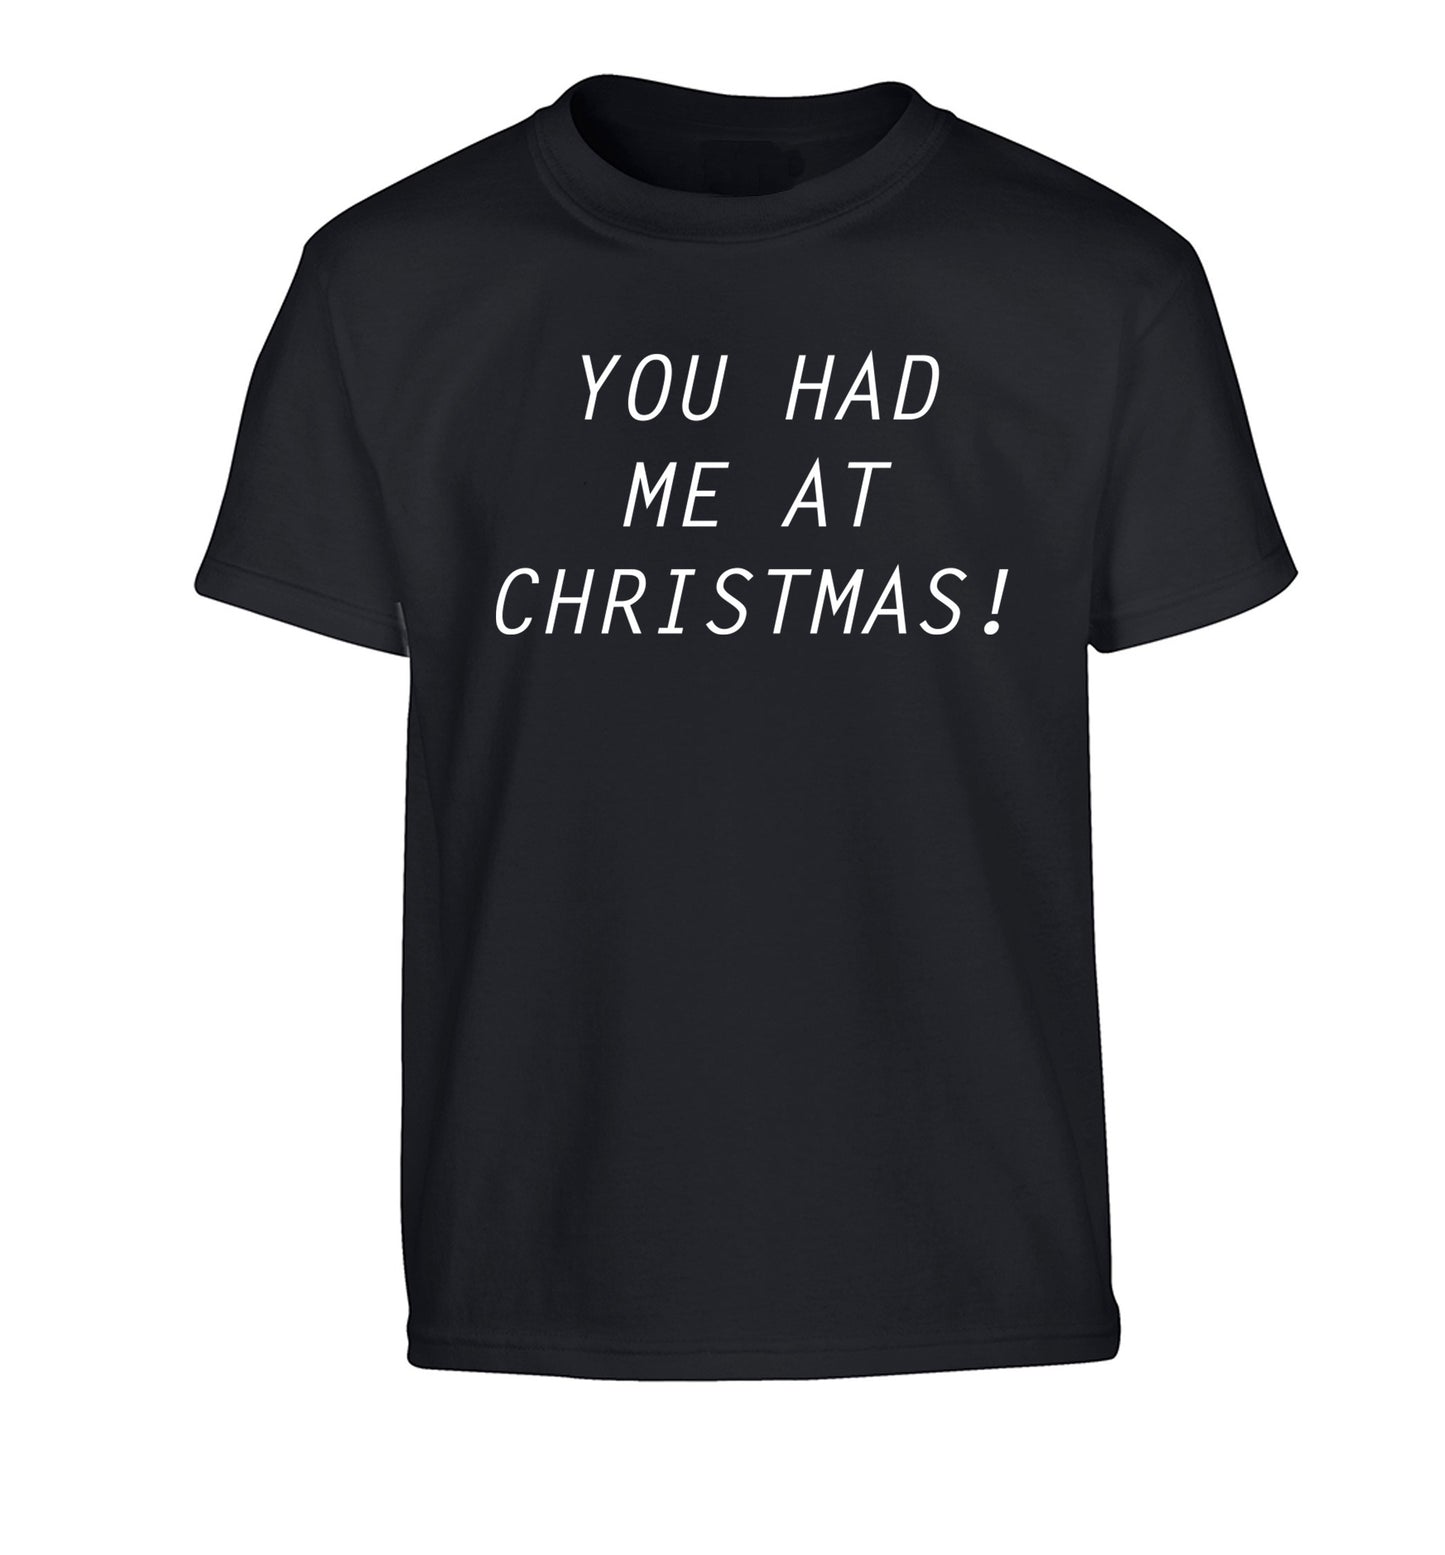 You had me at Christmas Children's black Tshirt 12-14 Years